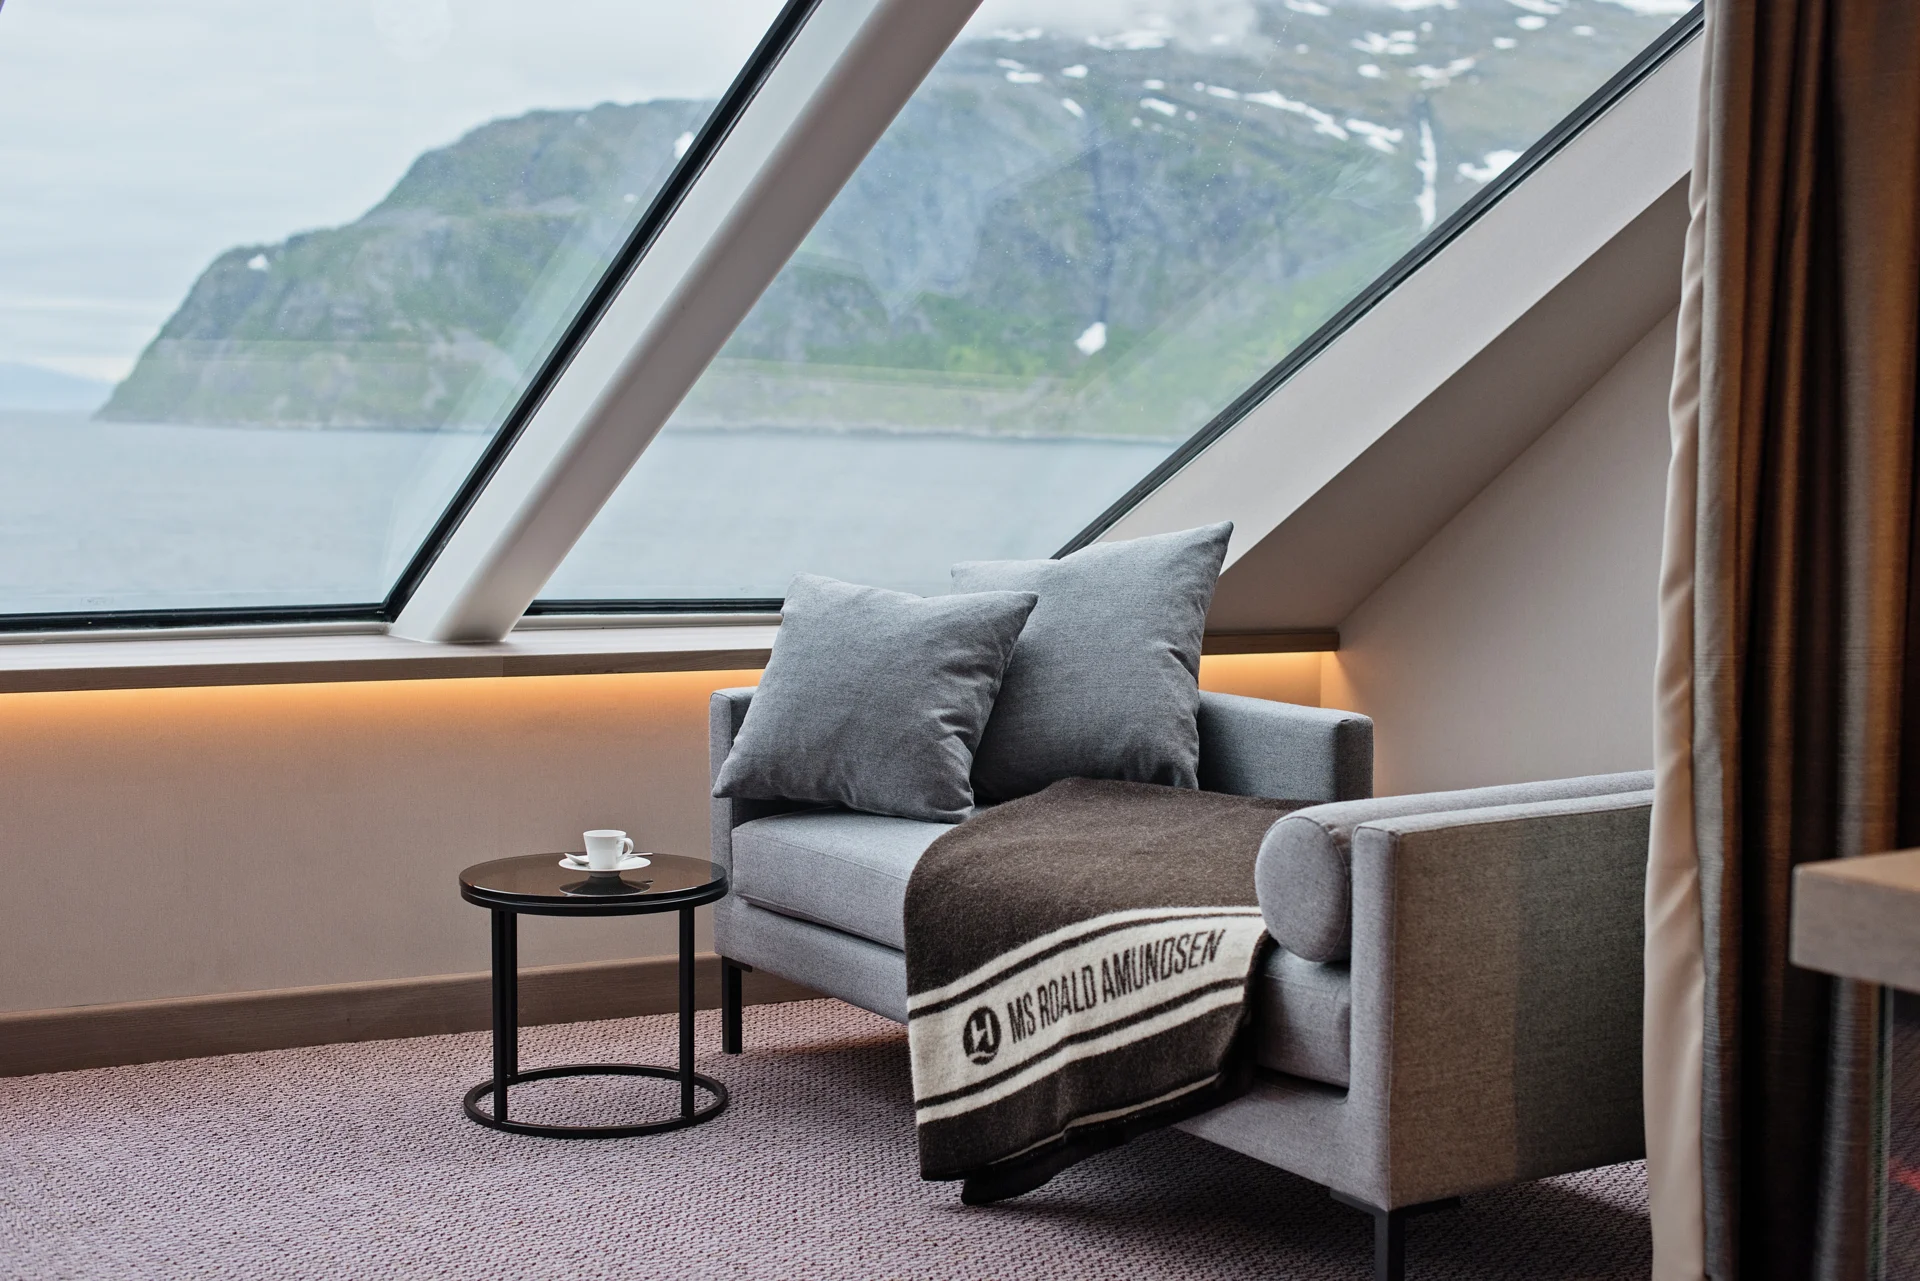 Expedition Suite (MA) onboard MS Roald Amundsen. Credit: Agurtxane Concellon. 